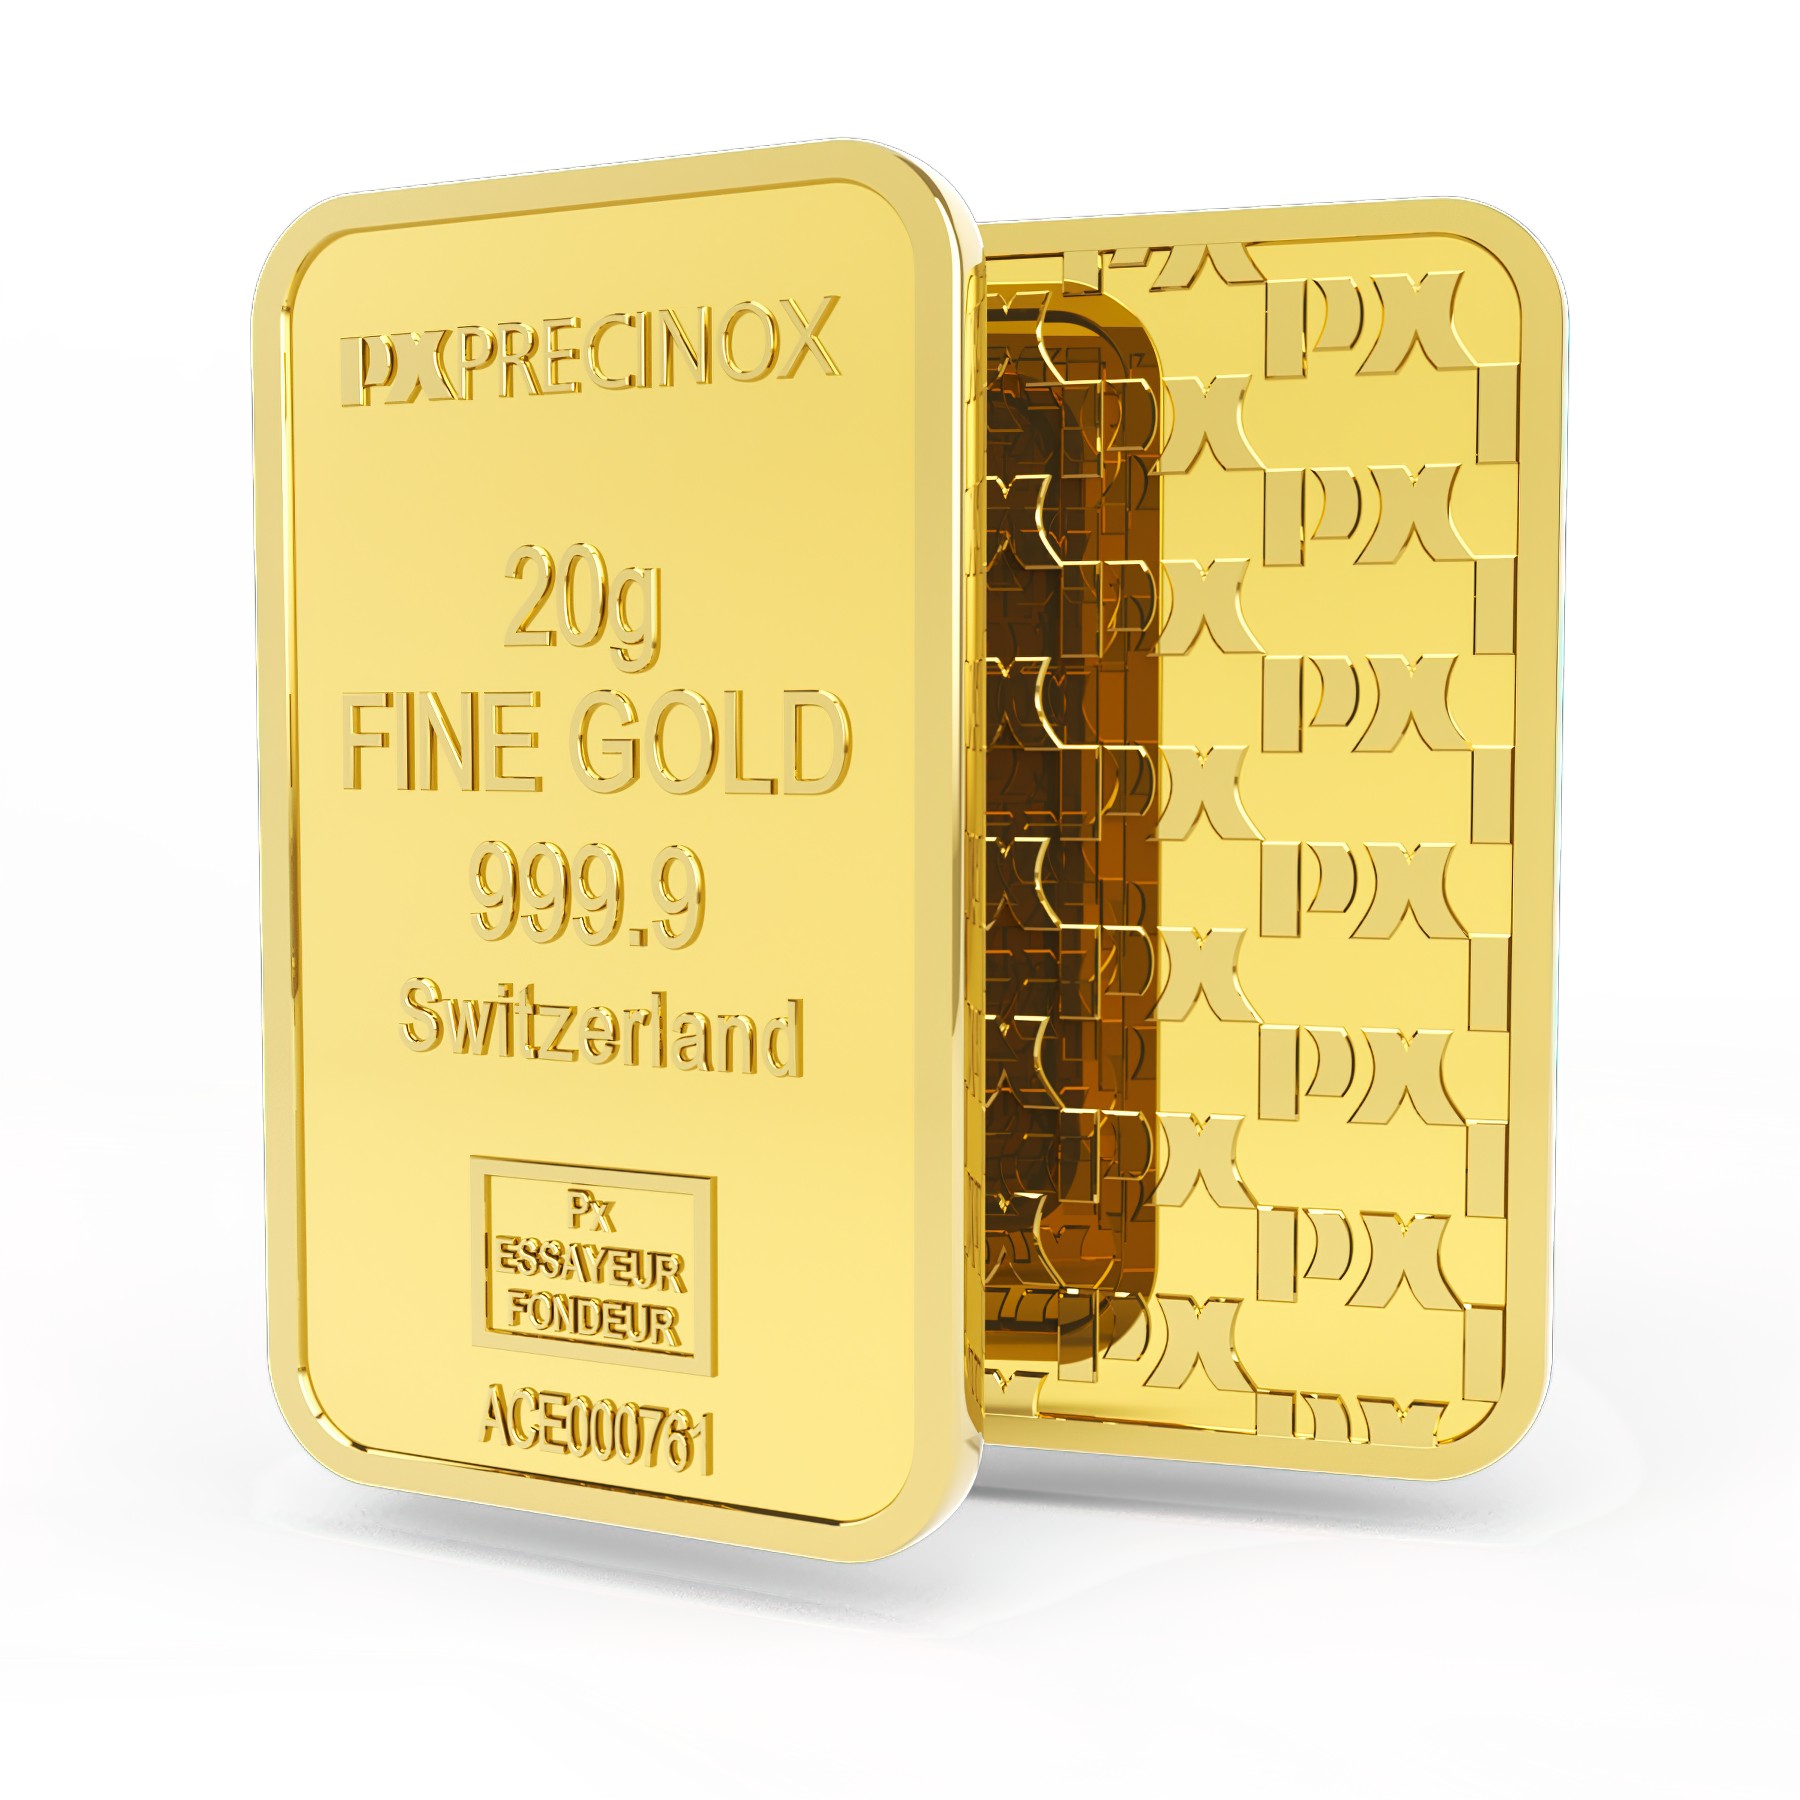 Lingou aur 20 gr, Elvetia, Fine Gold 999,9